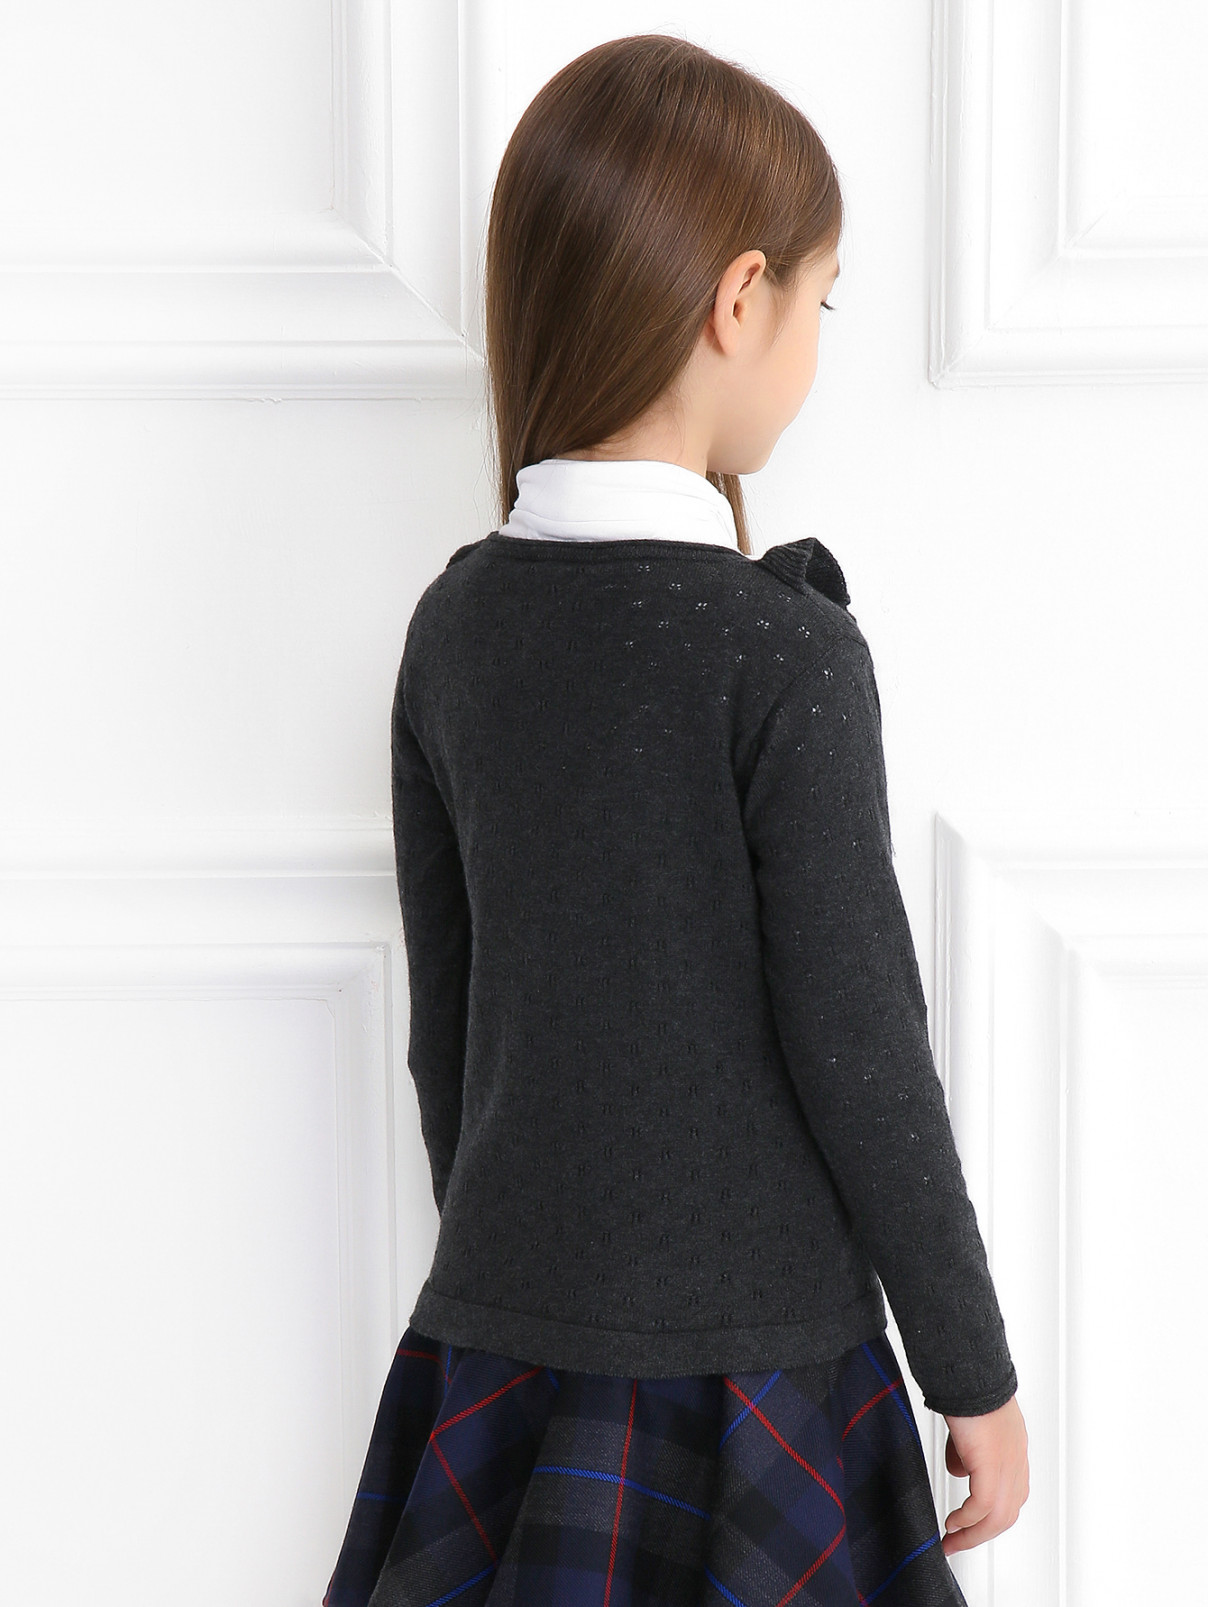 Кардиган из хлопка и кашемира Aletta Couture  –  Модель Верх-Низ1  – Цвет:  Серый